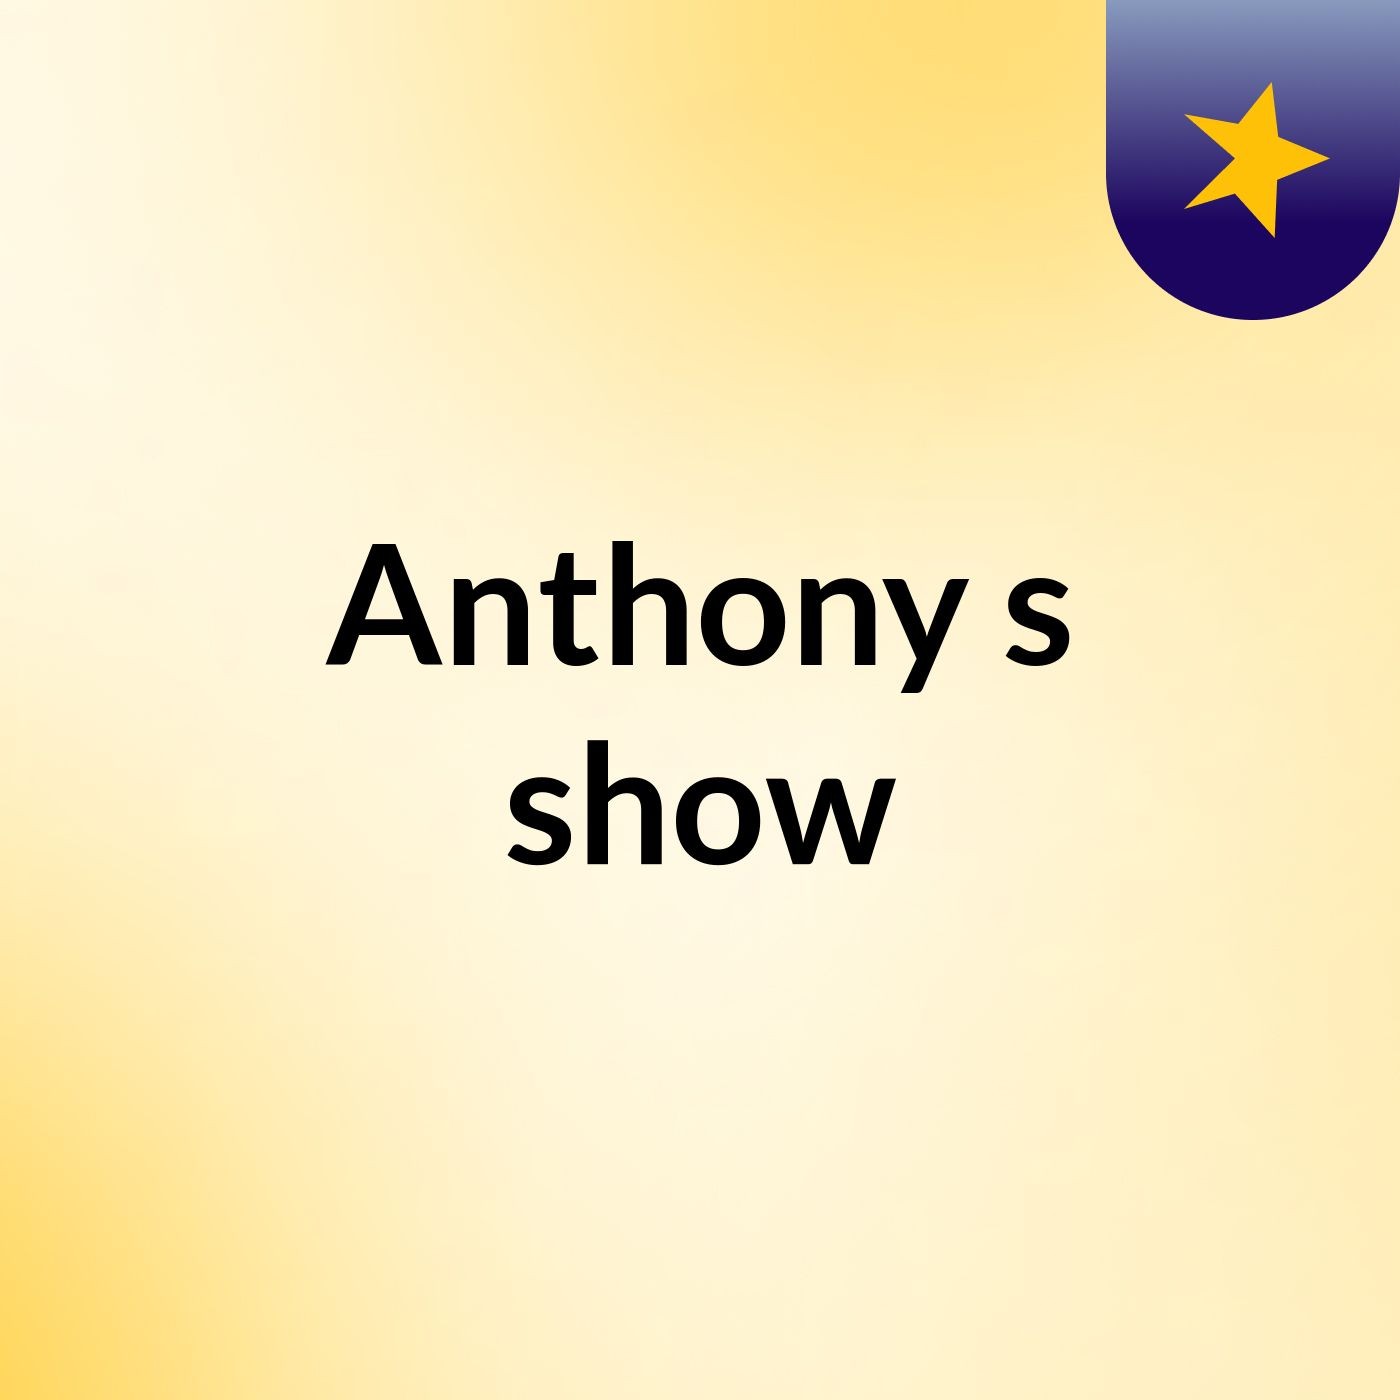 Anthony's show